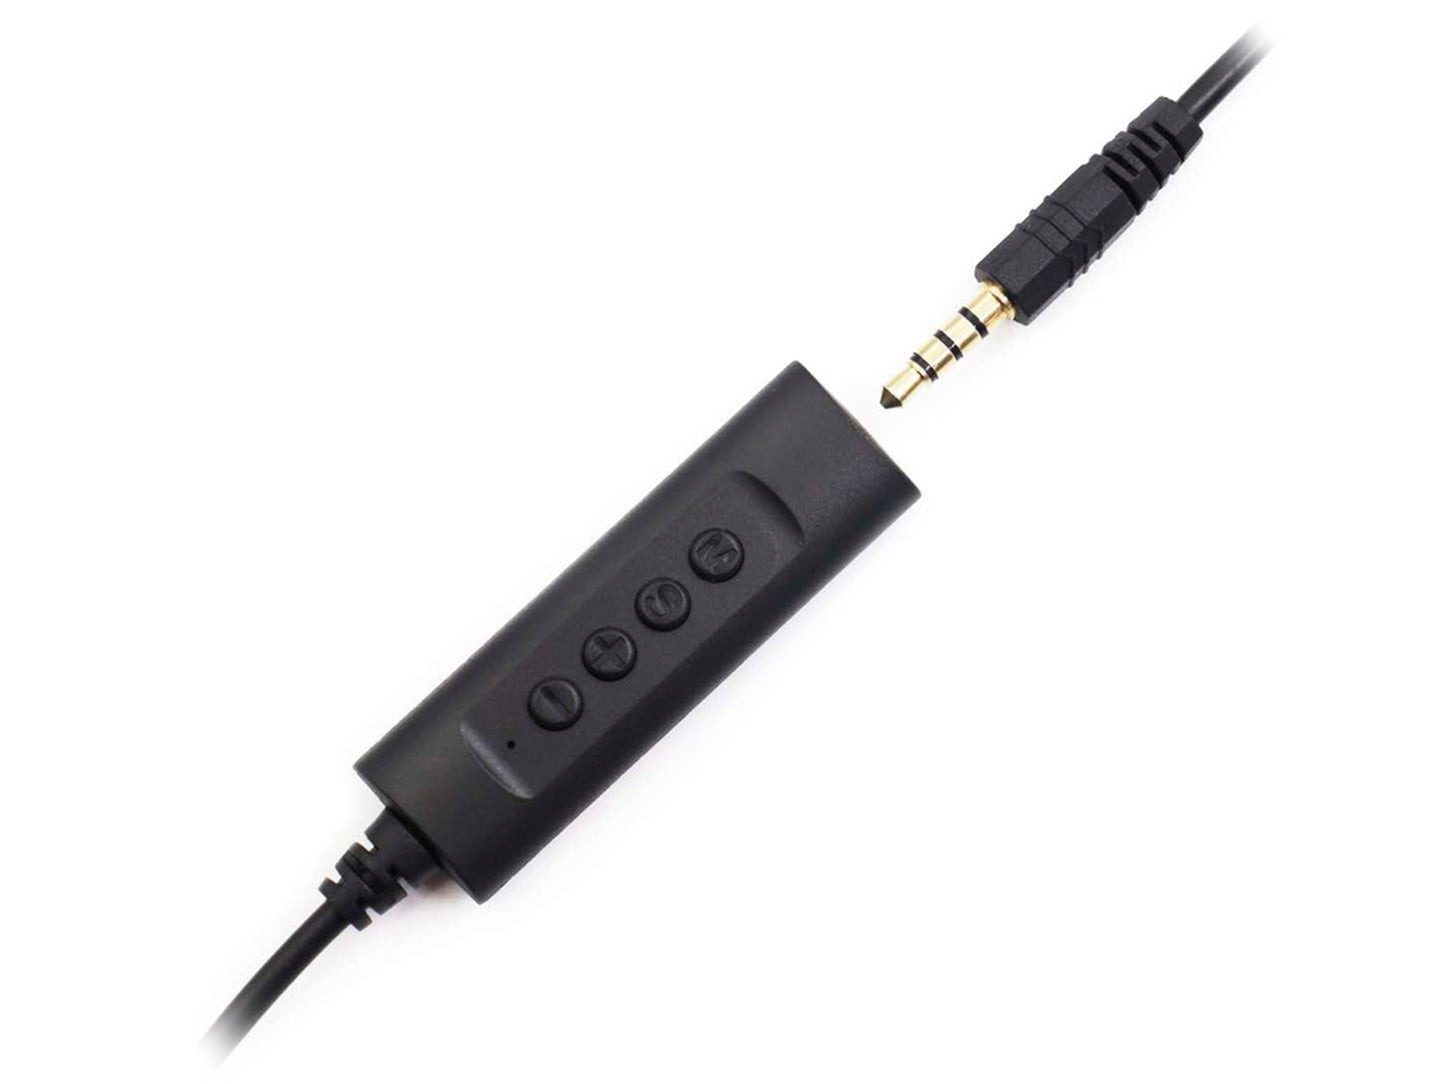 USB-контроллер для наушников Sandberg 134-17 — кабель 1,5 м, разъем MiniJack и USB-A